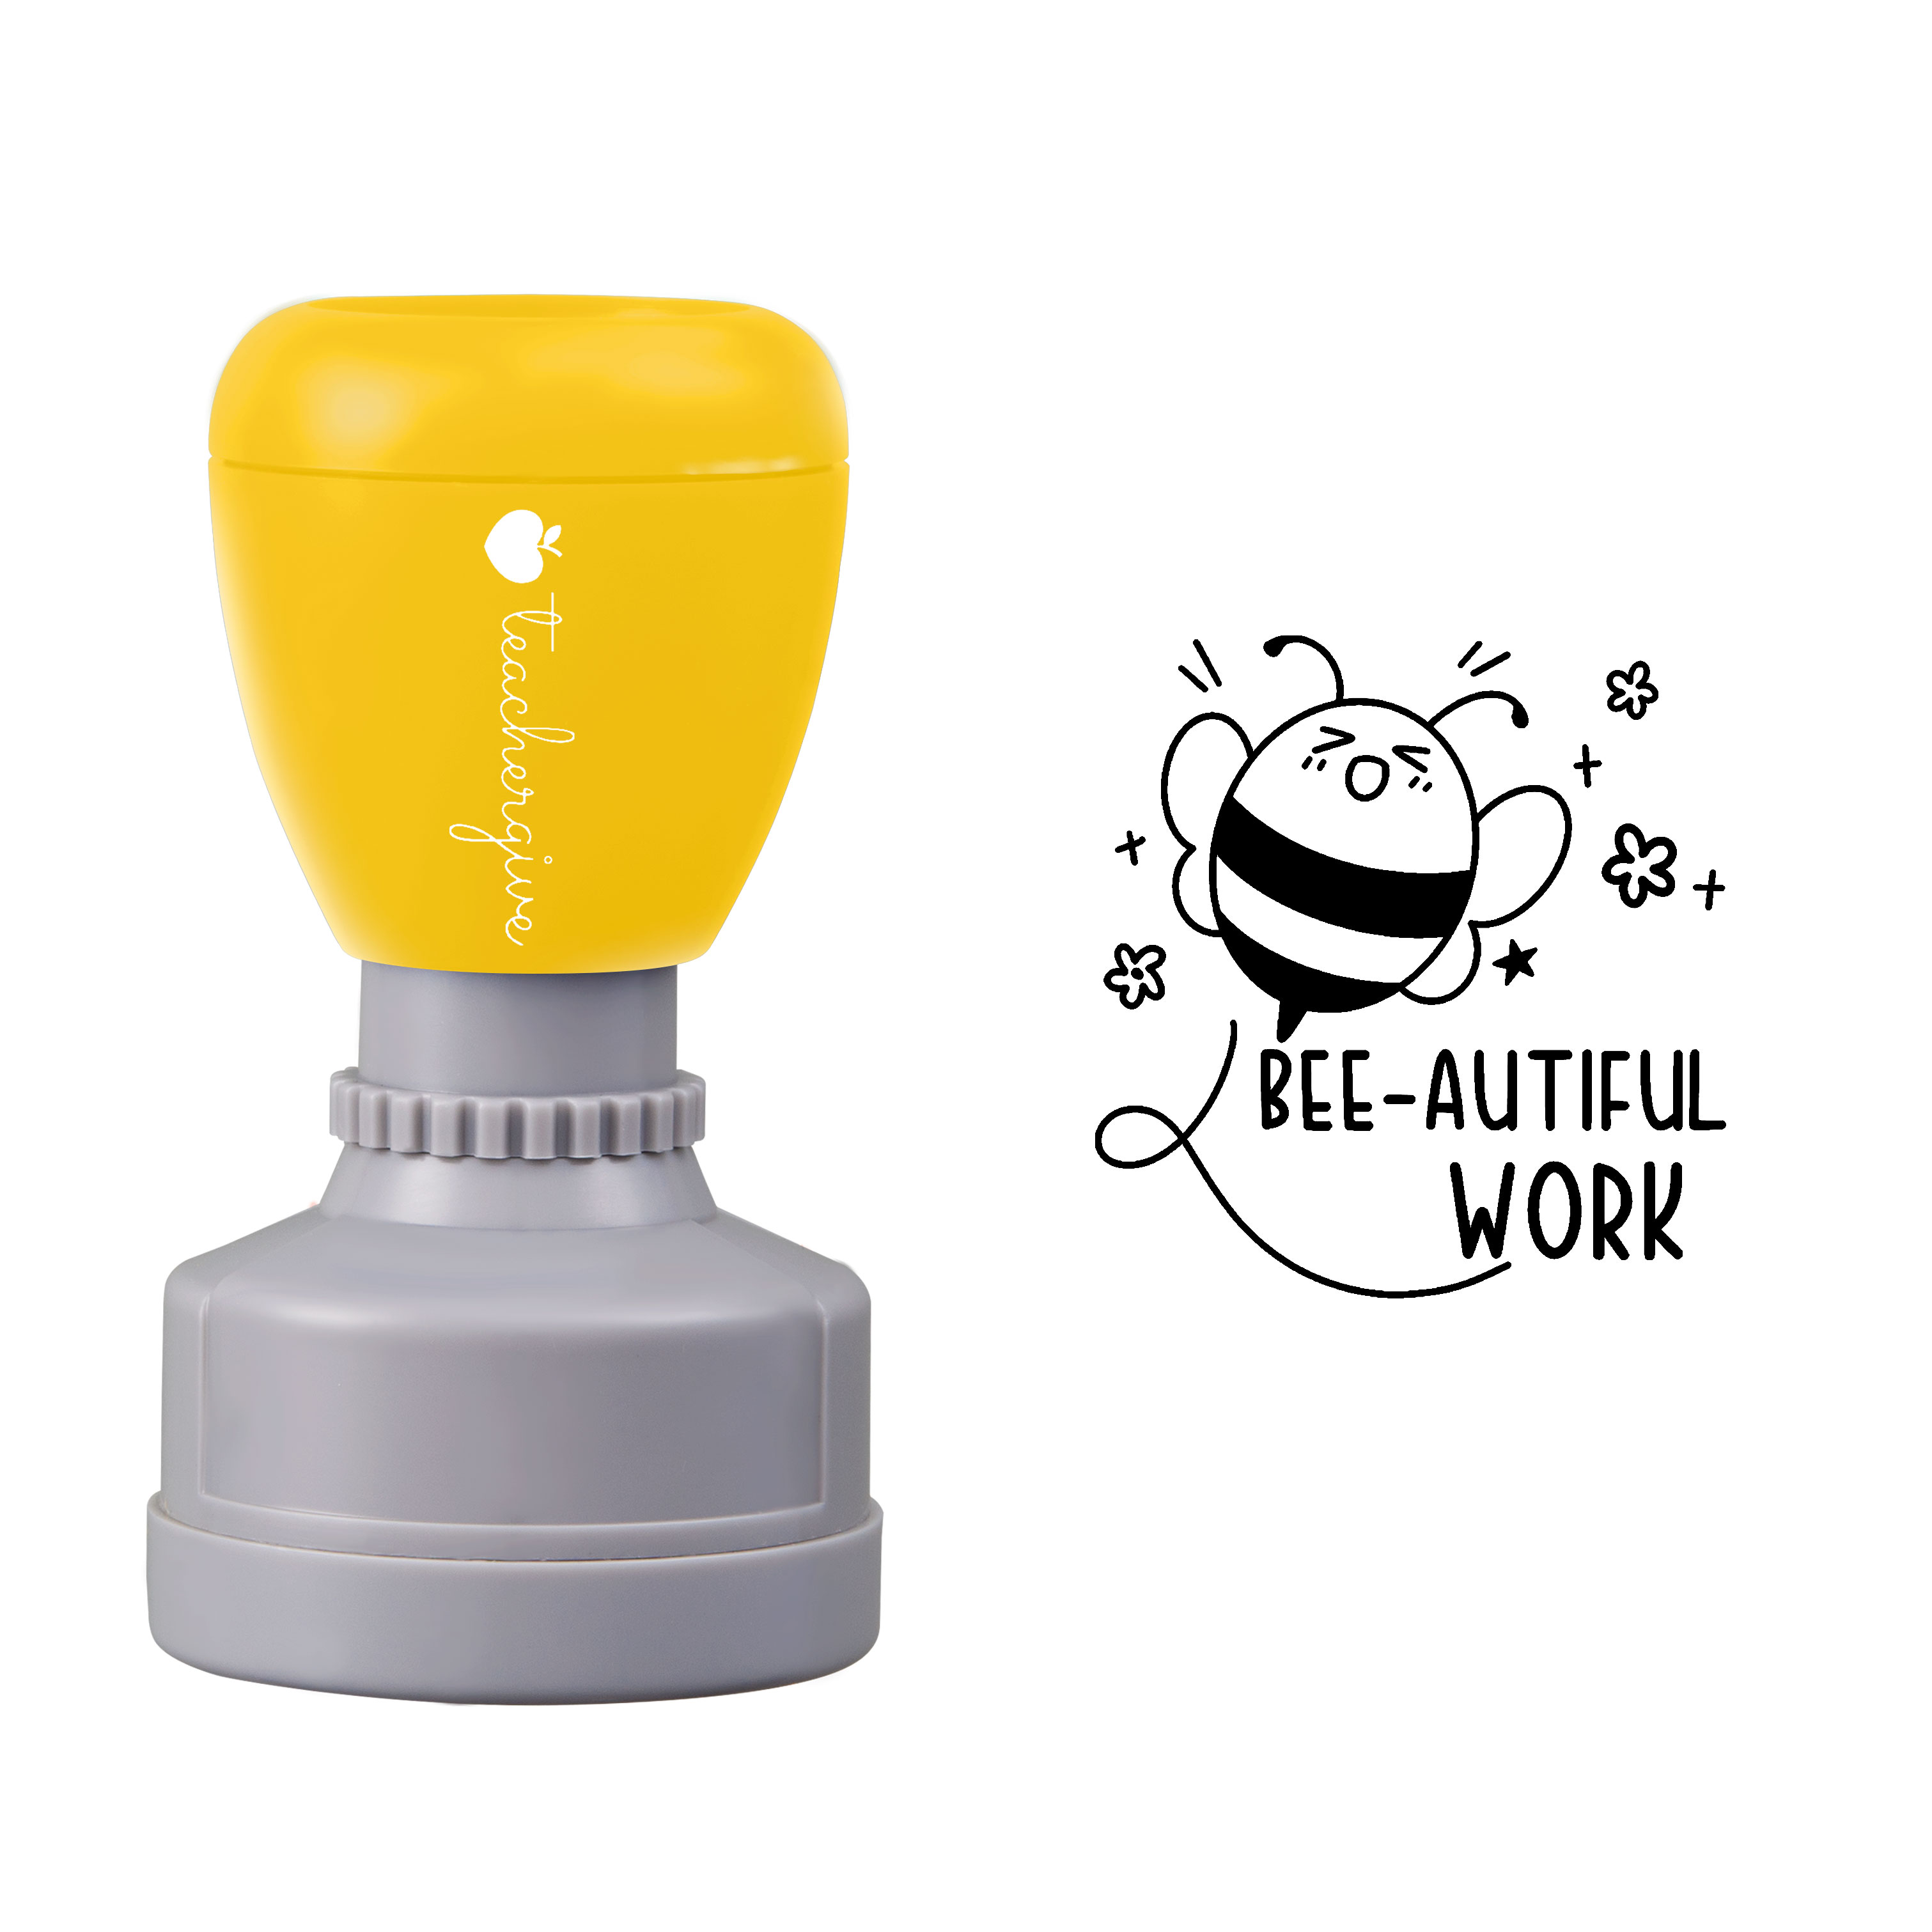 Bee-Autiful Work Stamp